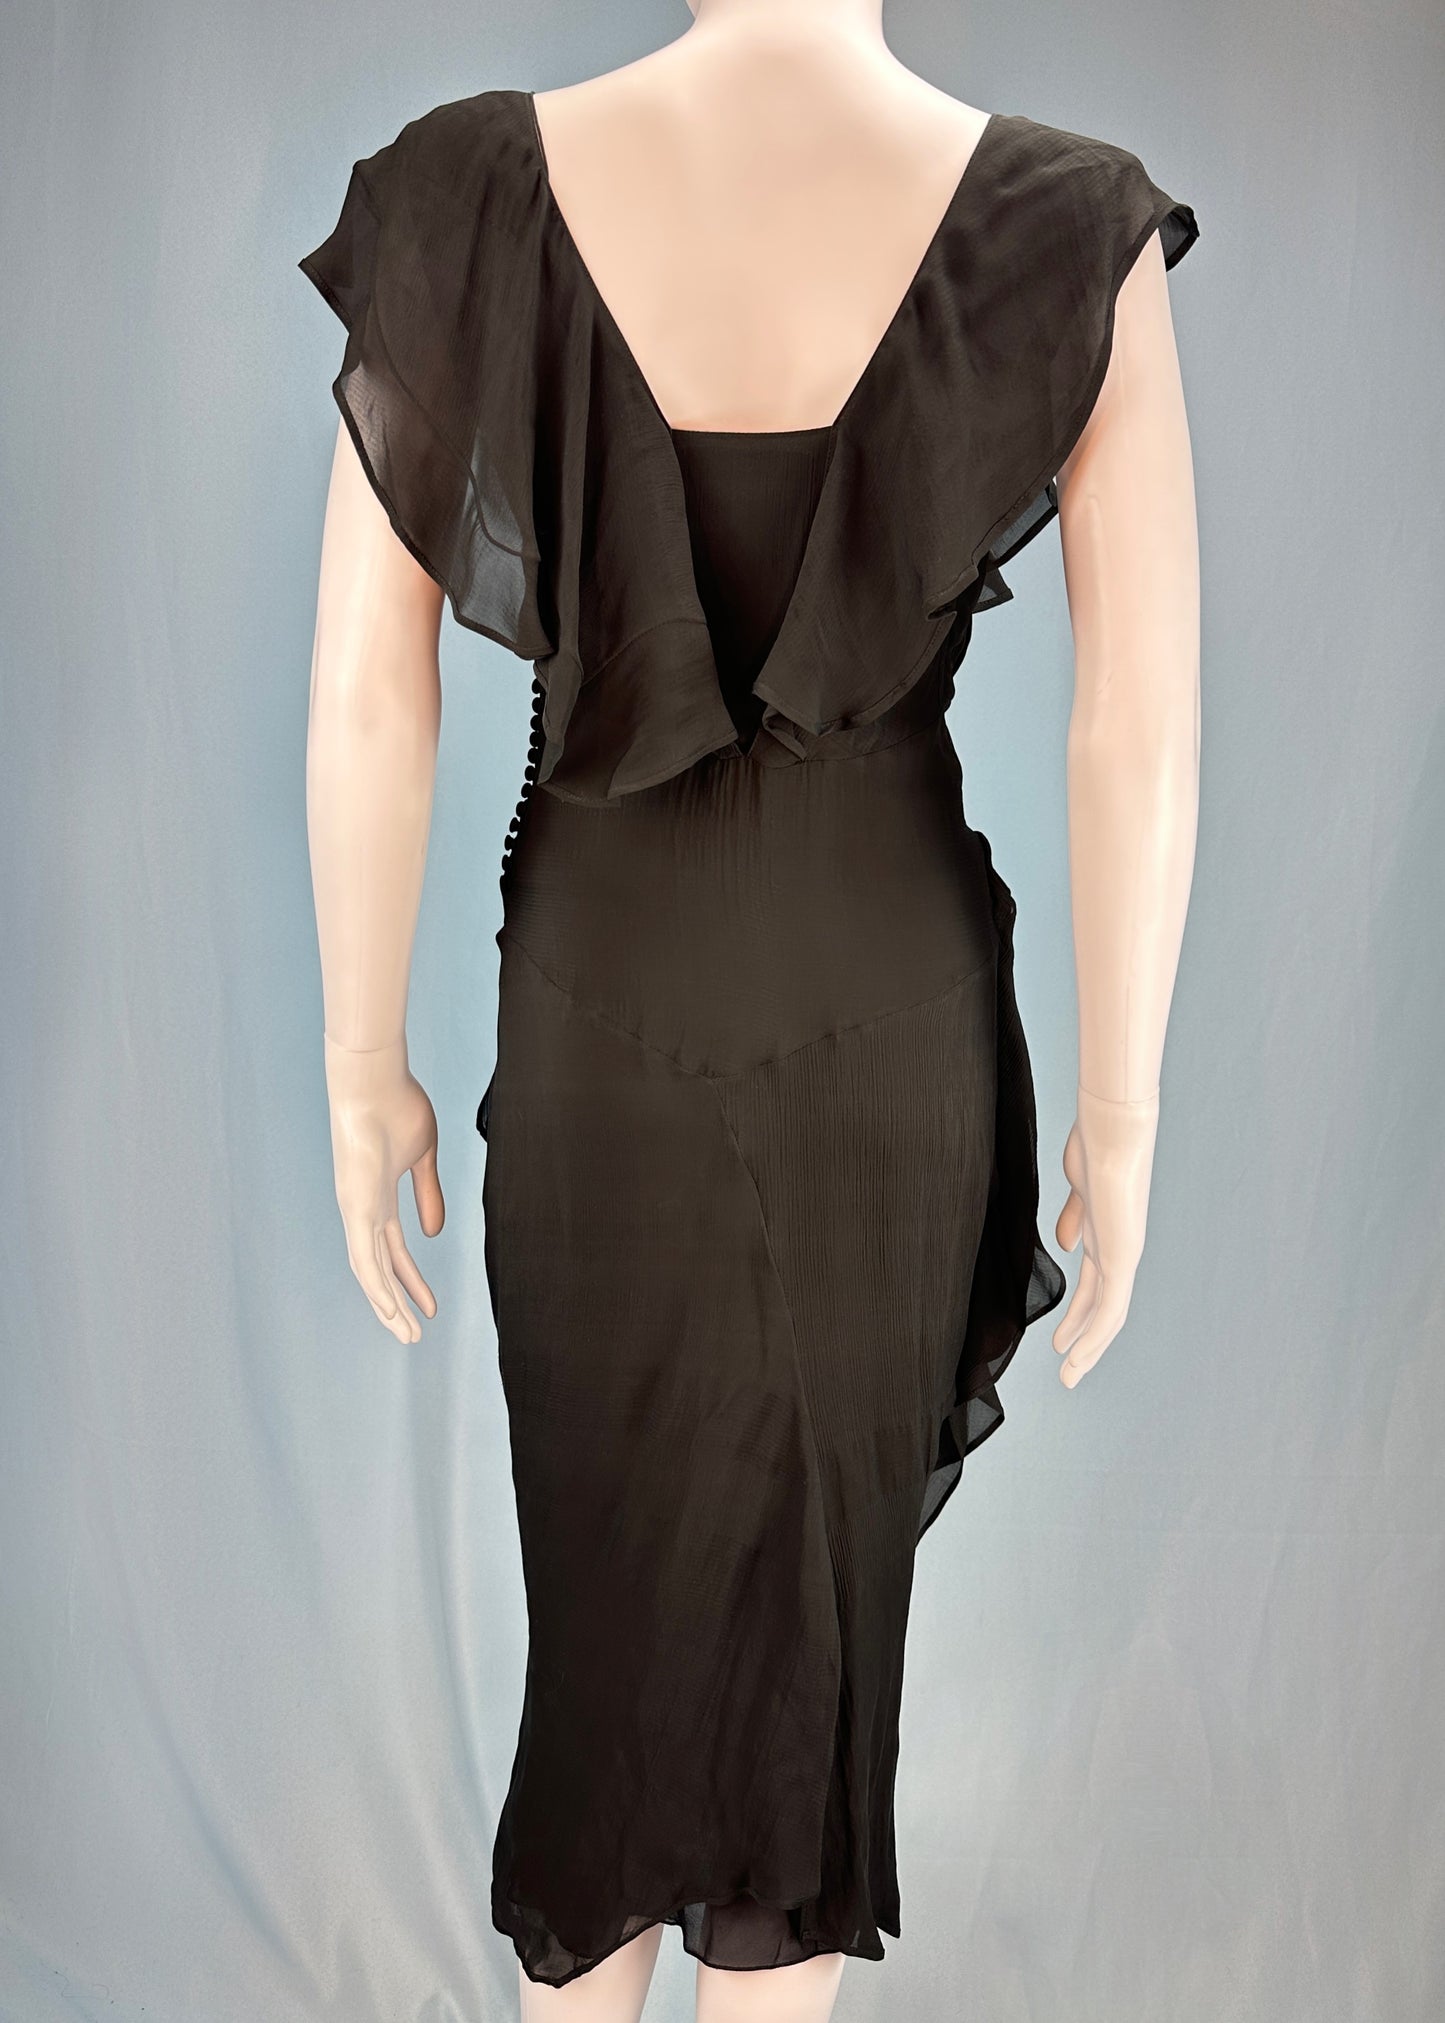 Dior Fall 2006 Black Silk Chiffon Ruffle Dress